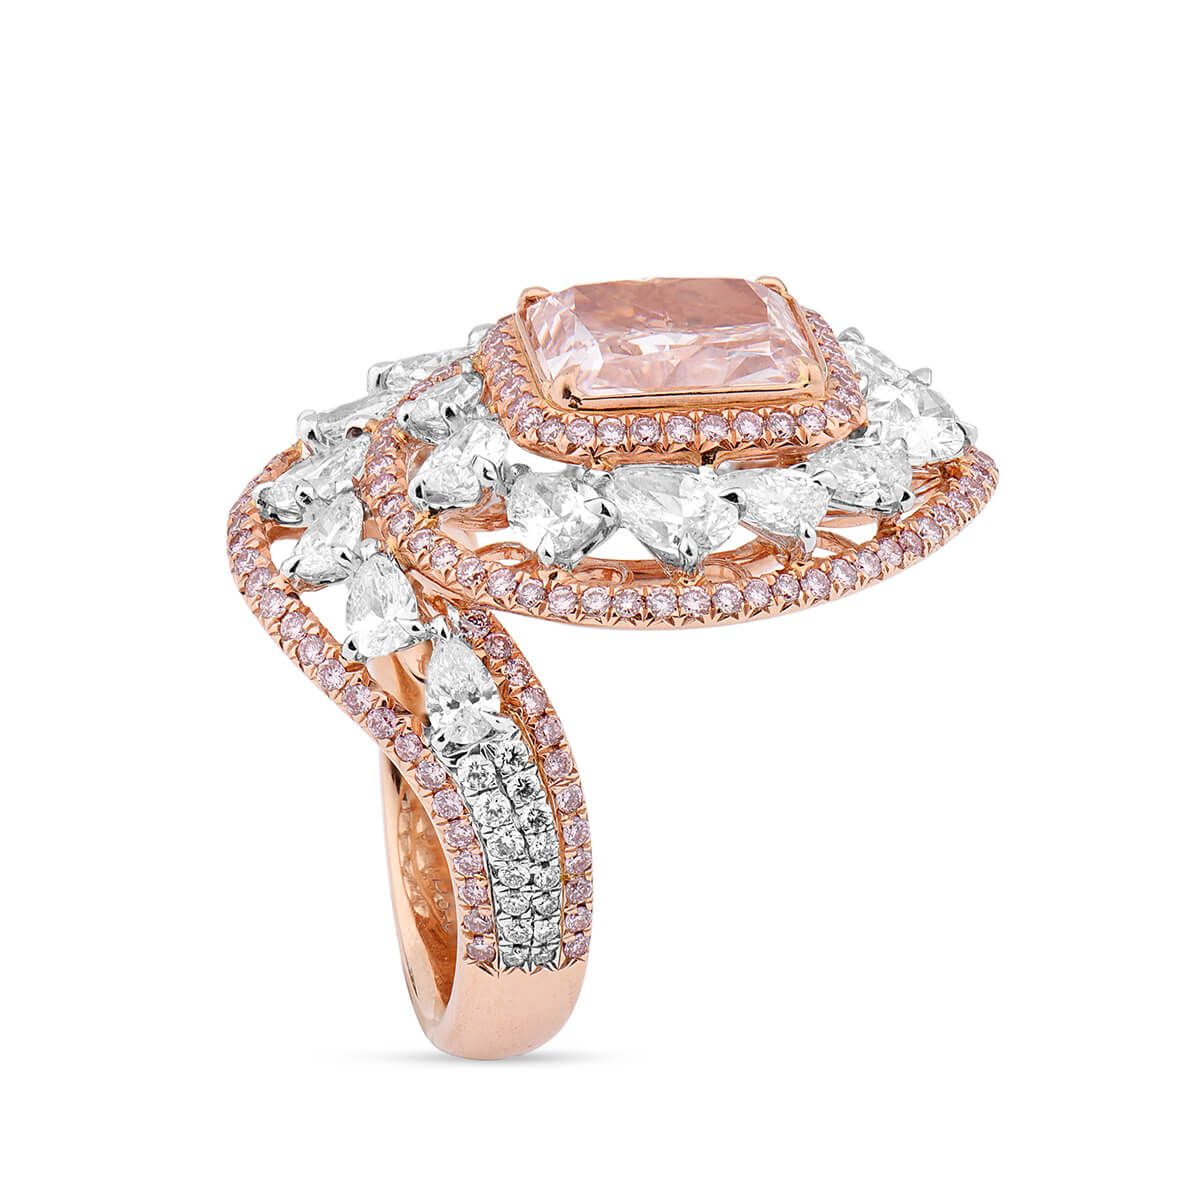 Light Pink Diamond Ring, 6.49 Ct. TW, Cushion shape, GIA Certified, 5181115159